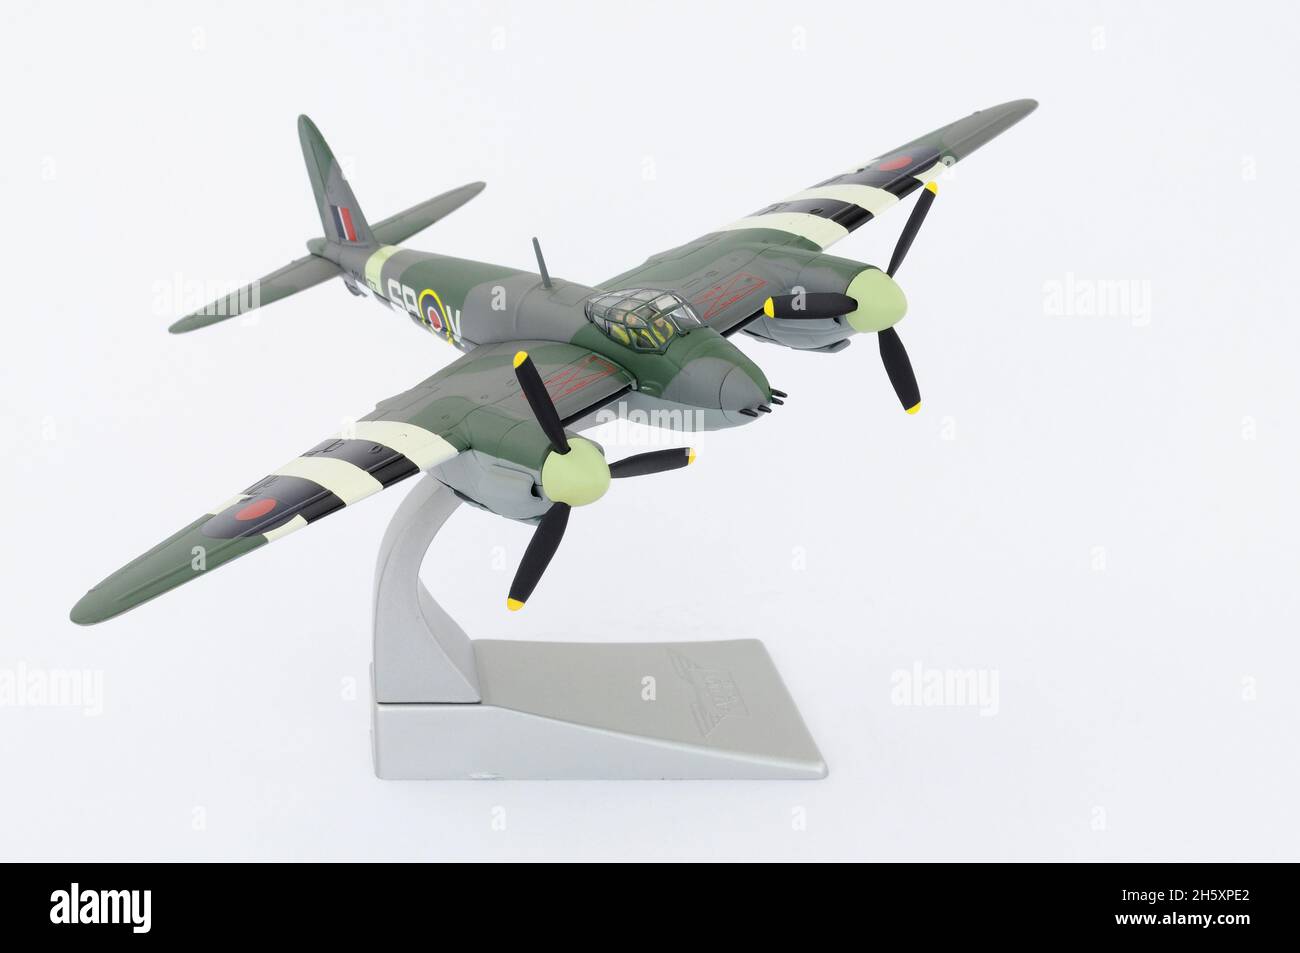 Corgi Aviation Archiv Sammlung Druckguss-Metall De Havilland Mosquito Jagdbomber 1/72 Modell Display Flugzeuge Stockfoto